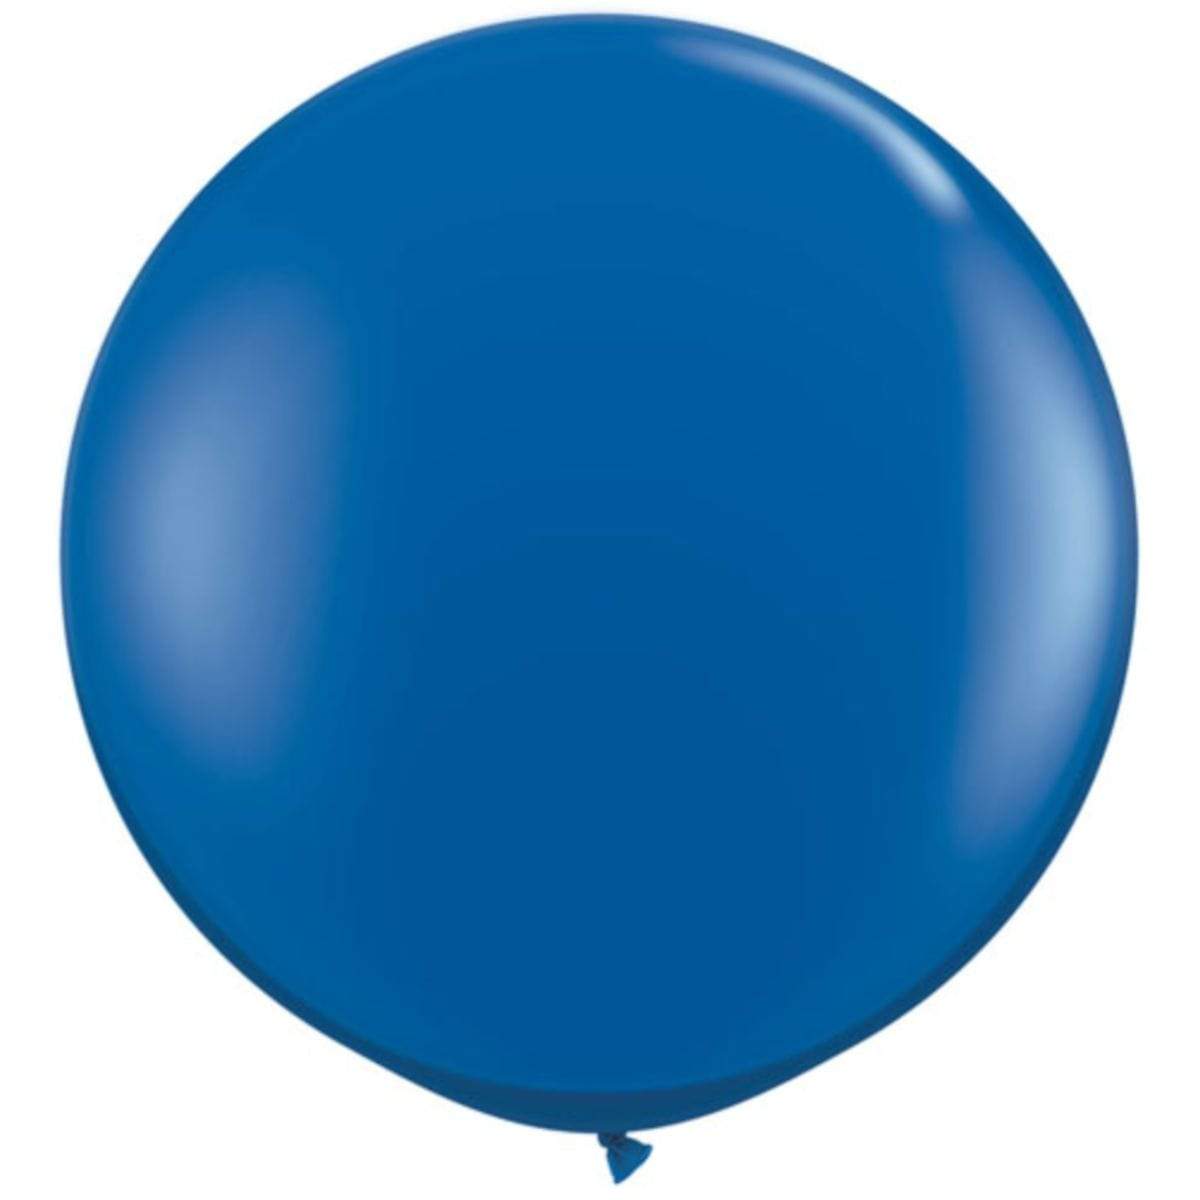 Голубому воздушному шару. Синий воздушный шар. Шар латексный голубой. Синий шарик. Шарик синего цвета.